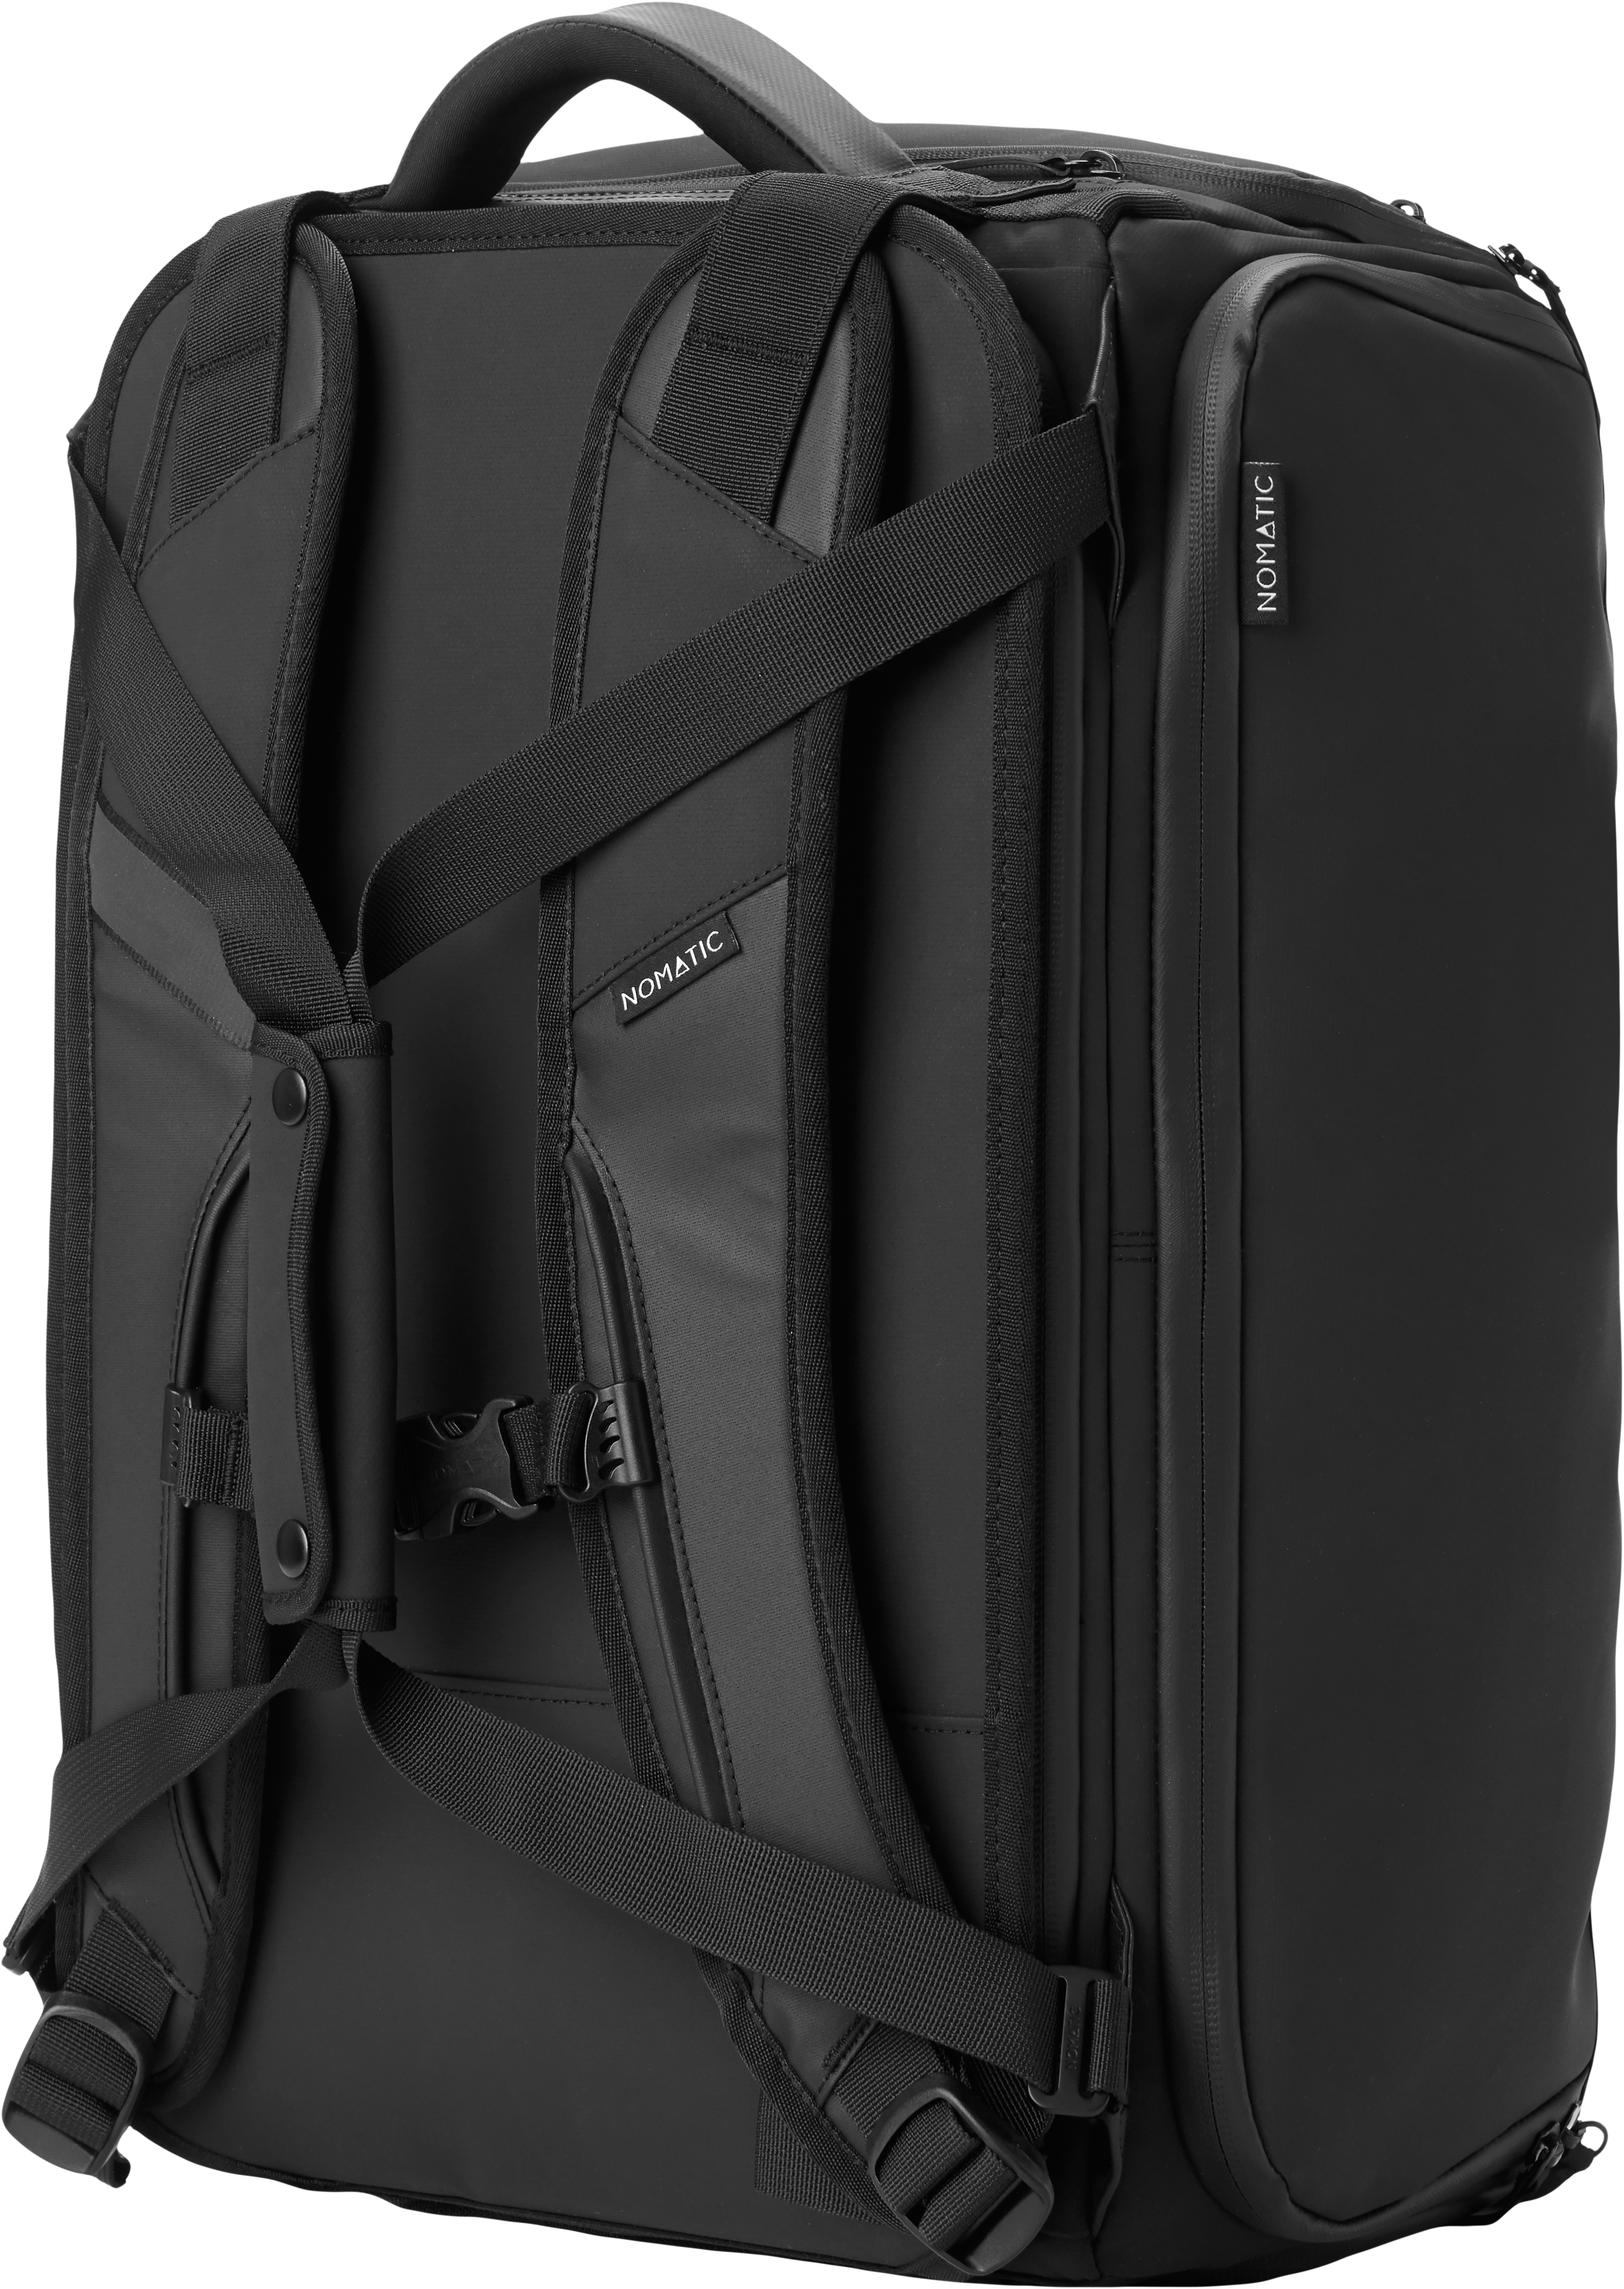 30L Travel Bag